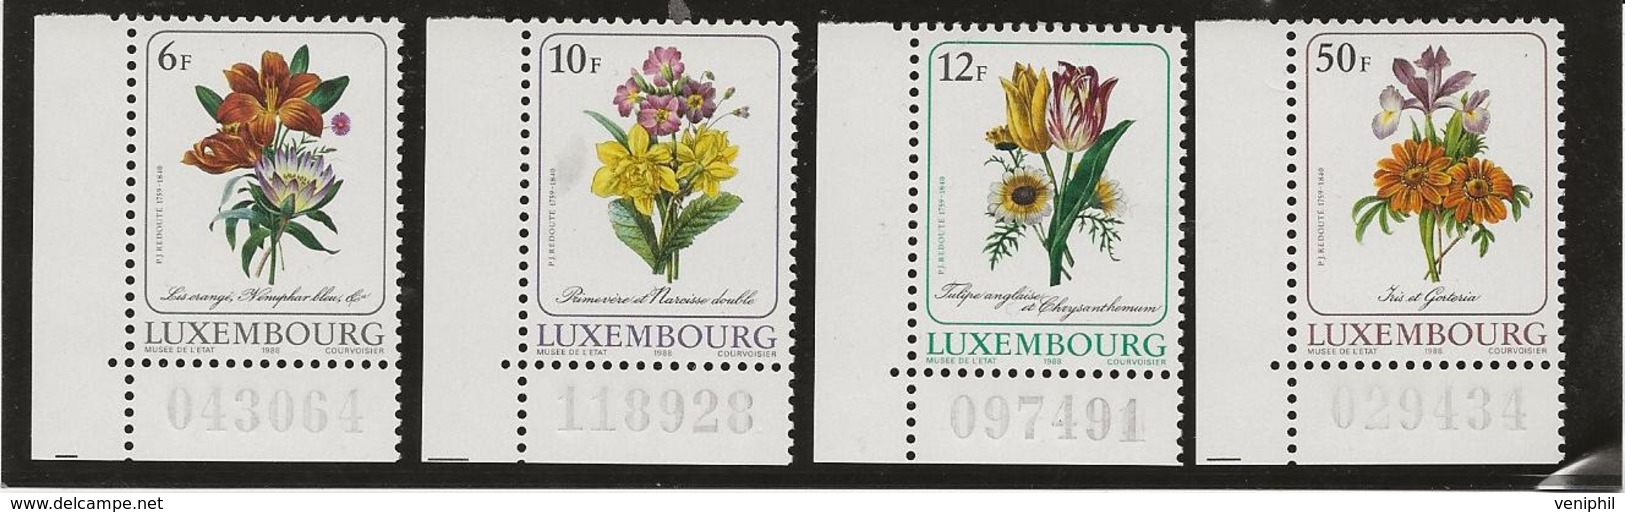 LUXEMBOURG - SERIE FLEURS N° 1140 A 1143 -NEUVE SANS CHARNIERE -ANNEE 1988 - Nuovi